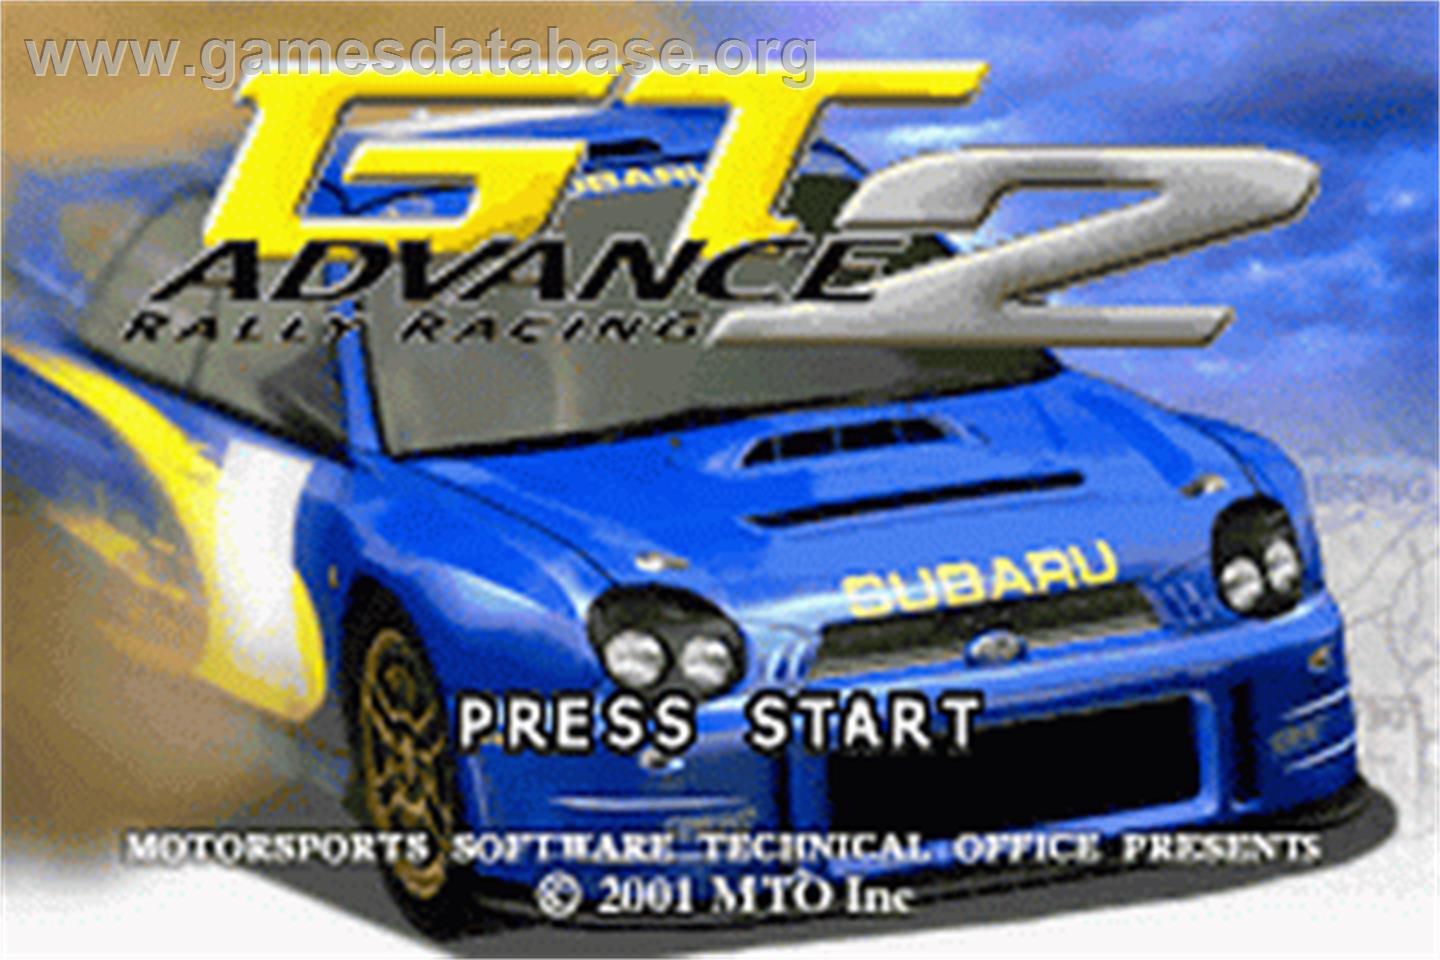 GT Advance 2 Rally Racing - Nintendo Game Boy Advance - Artwork - Title Screen